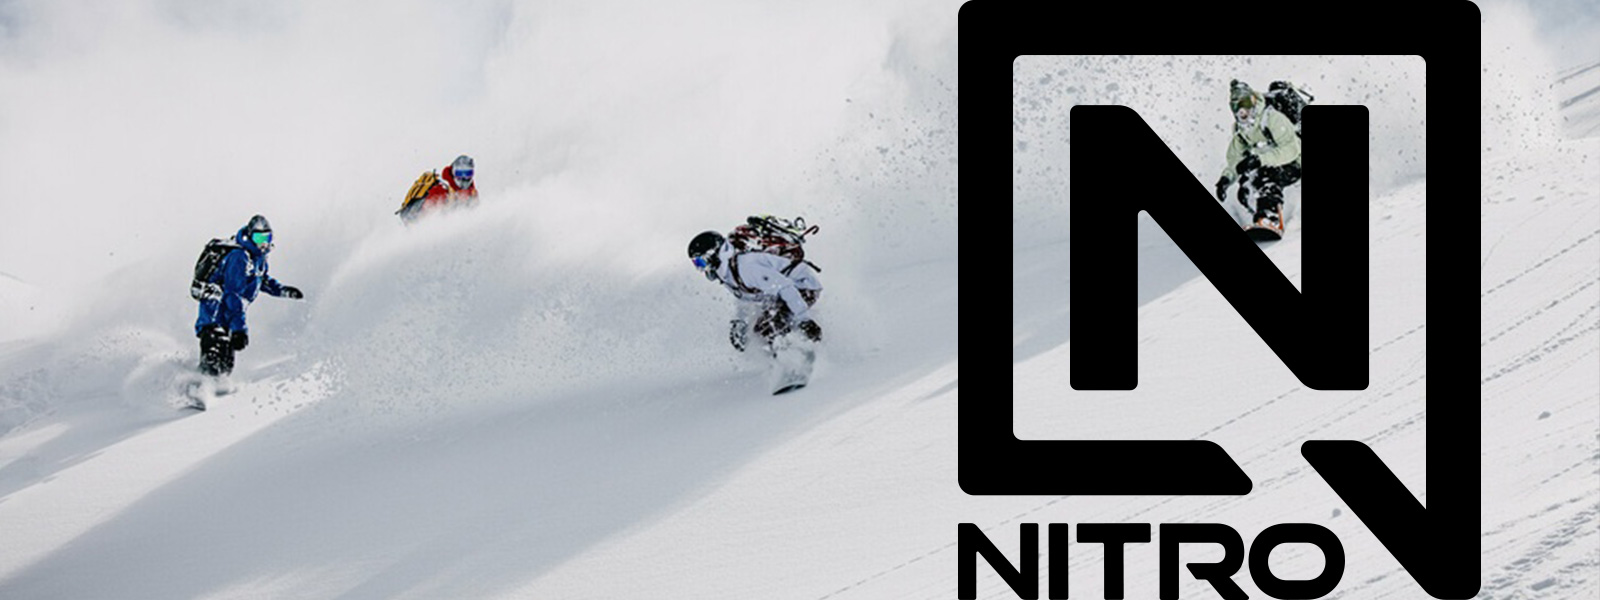 SoCal Surf Shop Nitro Snowboarding